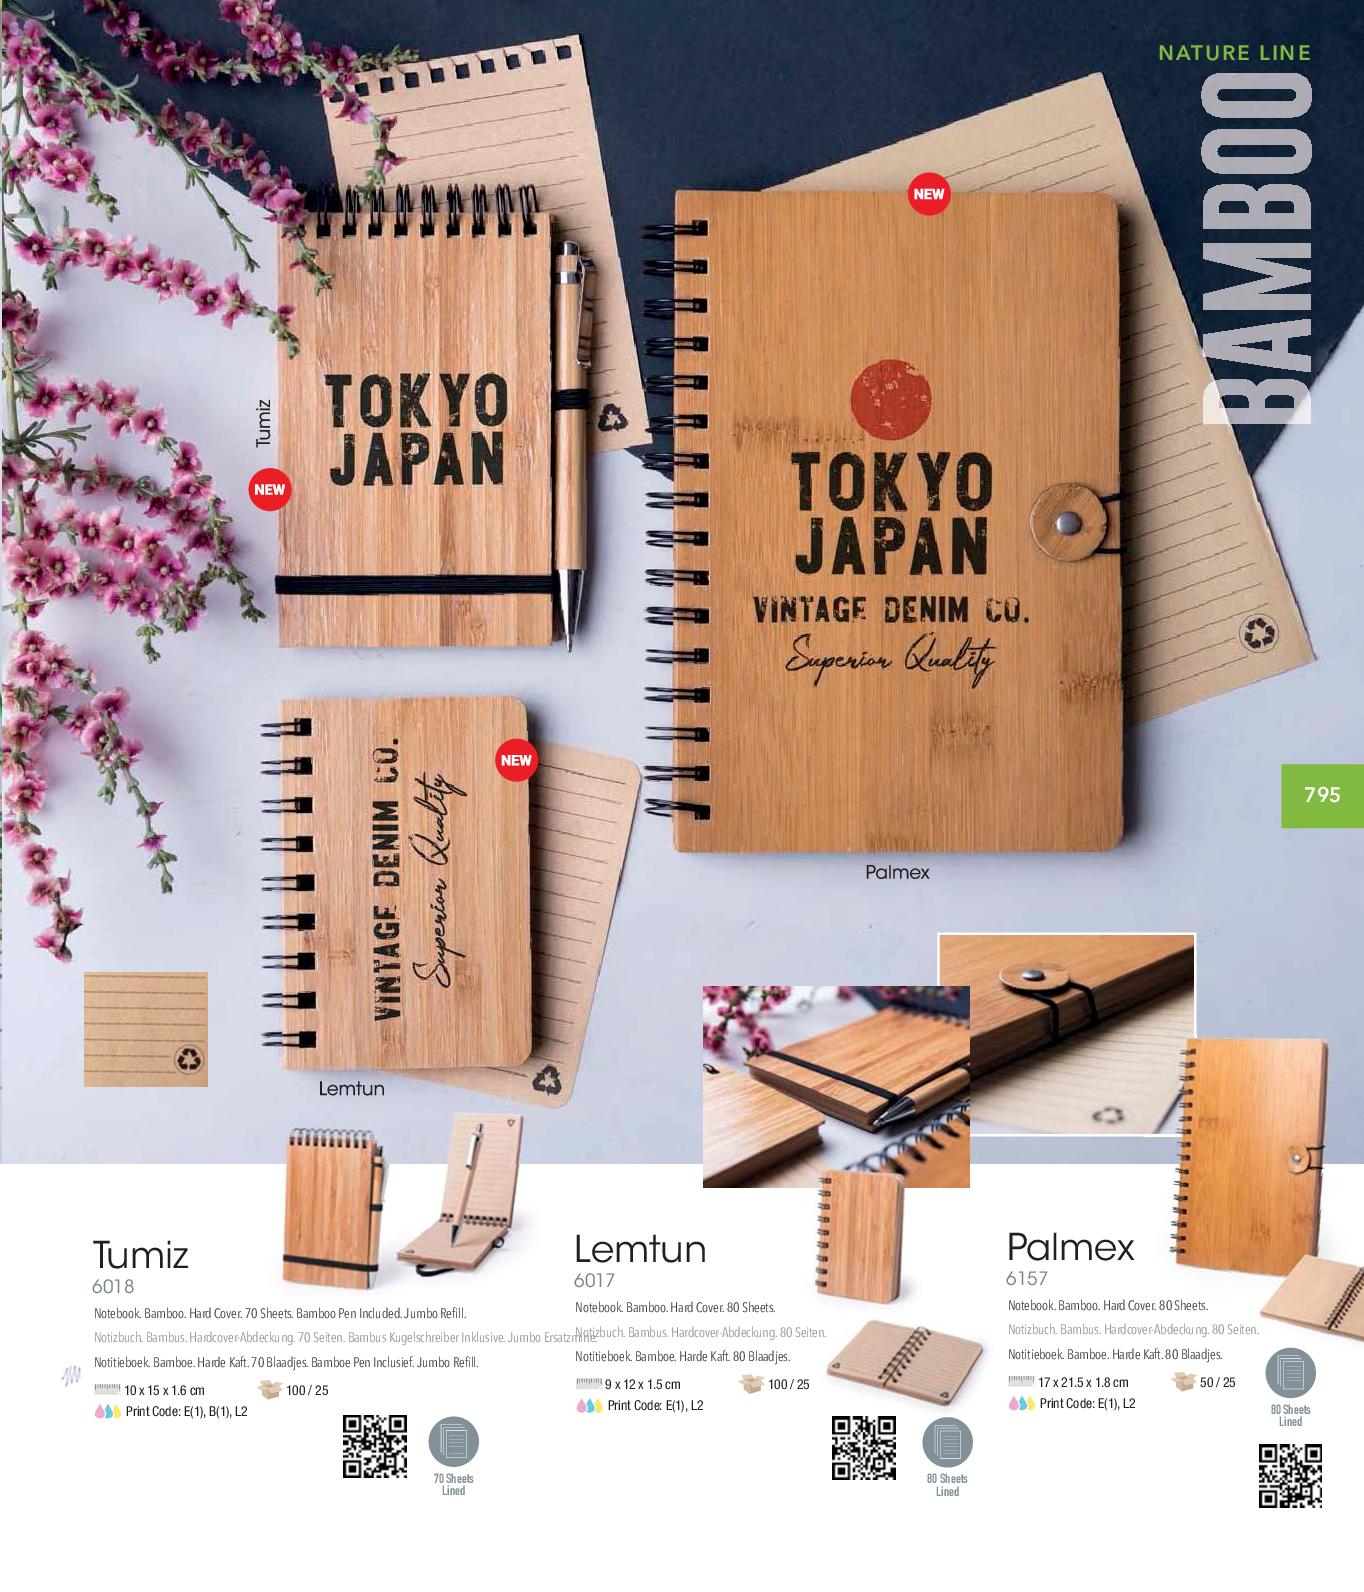 Holz Und Garten Frisch Calaméo Promotional Products 2019 Part3